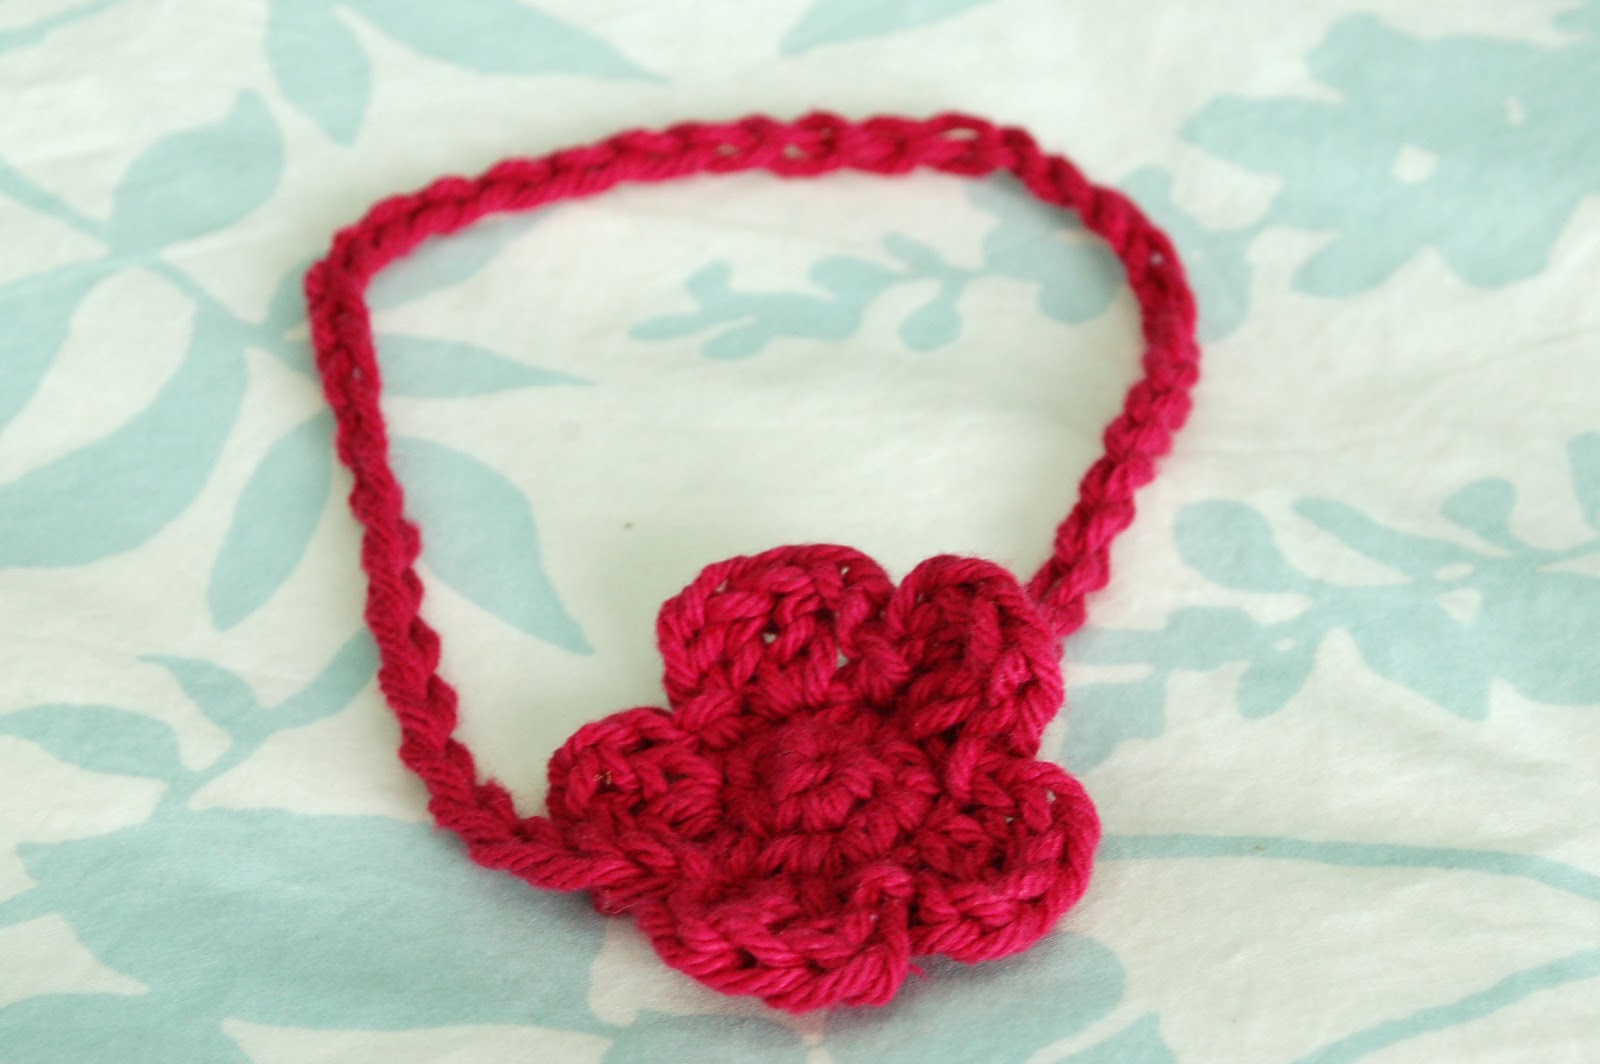 973 New baby headbands crochet patterns 434 Alli Crafts: Free Pattern: Baby Headband 